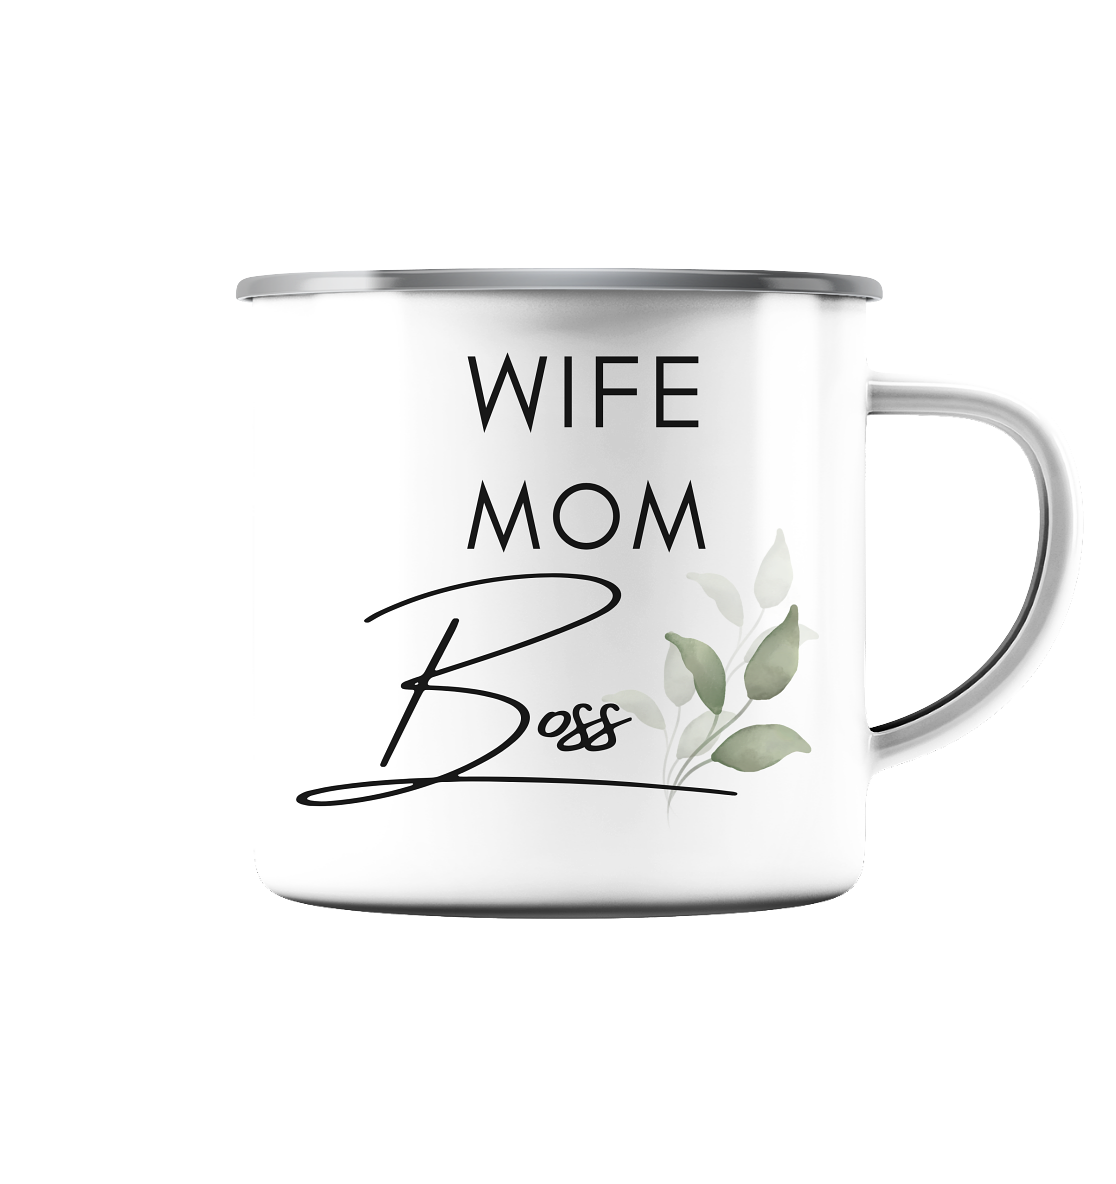 Wife. Mom. Boss. - Emaille Tasse (Silber)